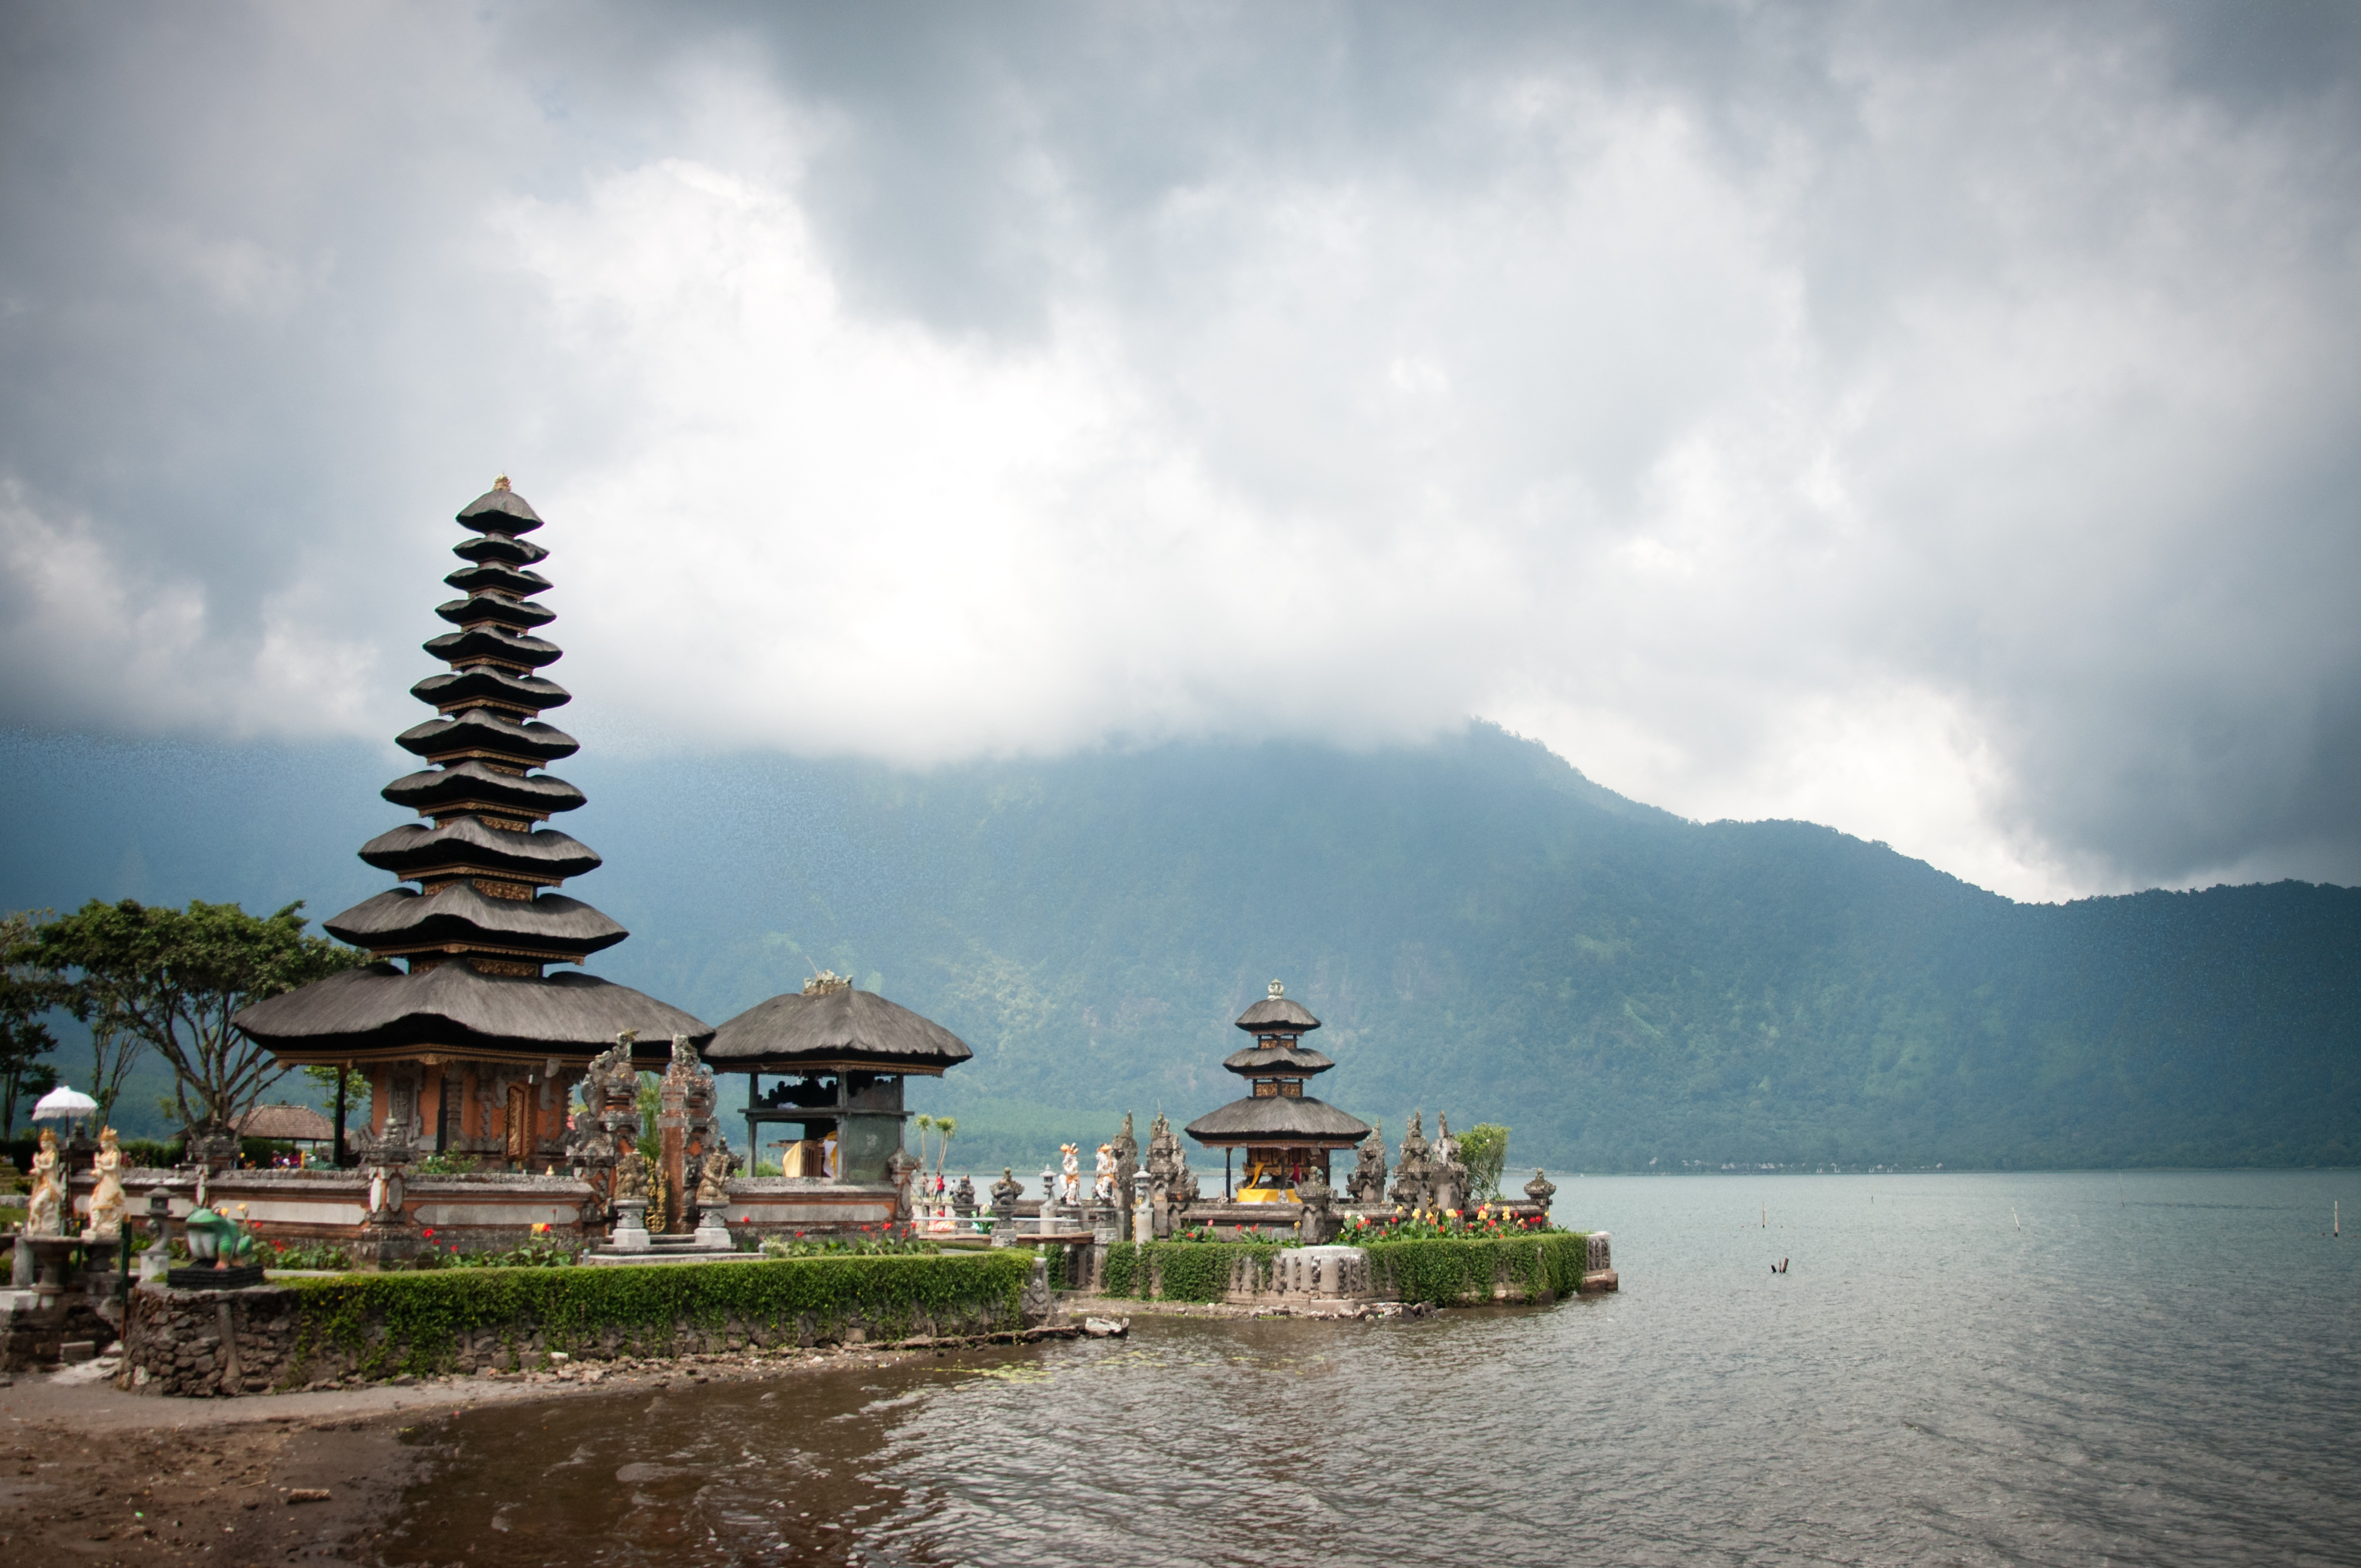 Pura ulun danu temple on a lake beratan photo